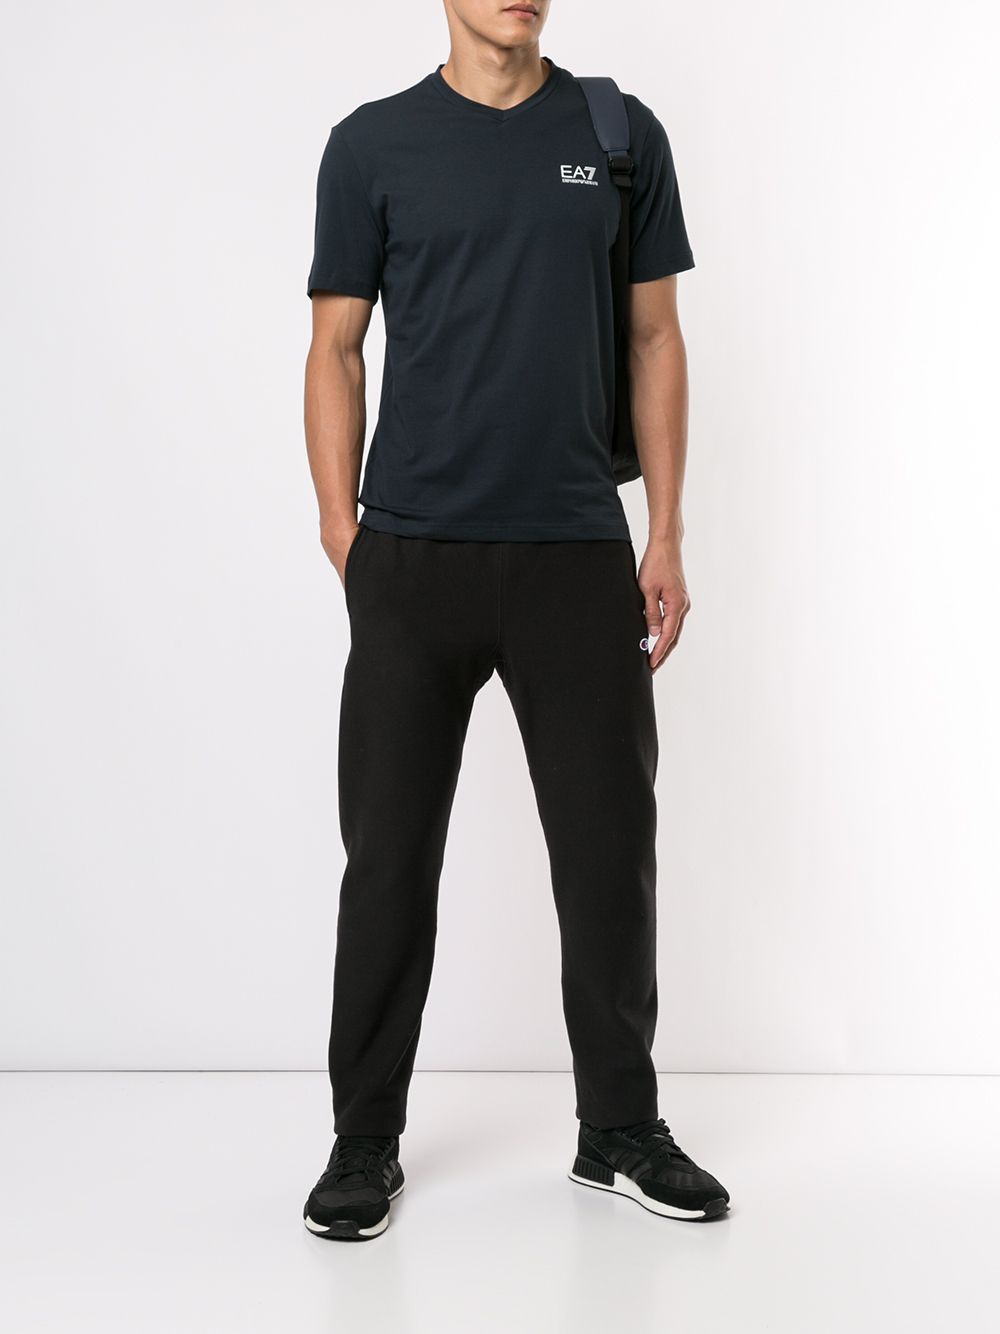 Ea7 Emporio Armani v-neck T-shirt - Farfetch